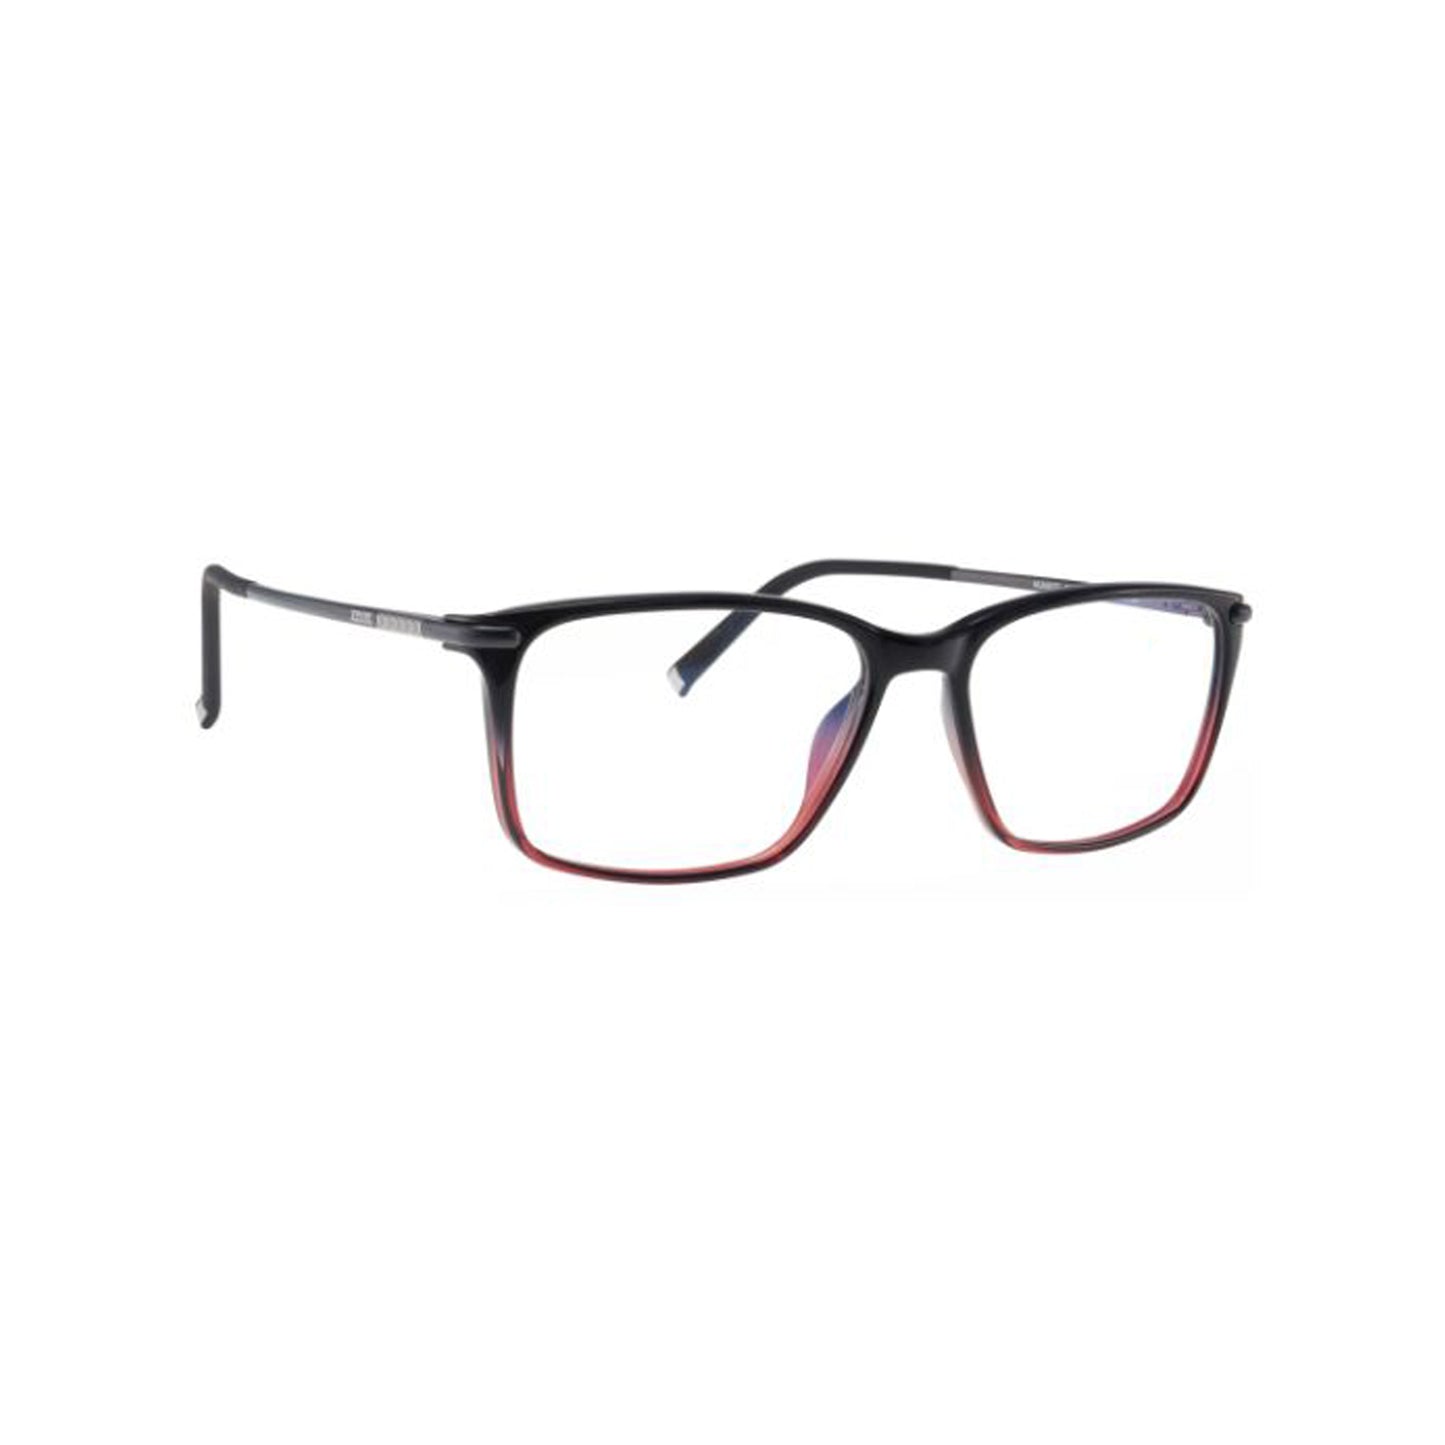 Zeiss Eyewear Black Square Acetate Full Rim Eyeglasses. Made in Germany ZS20007-Y21